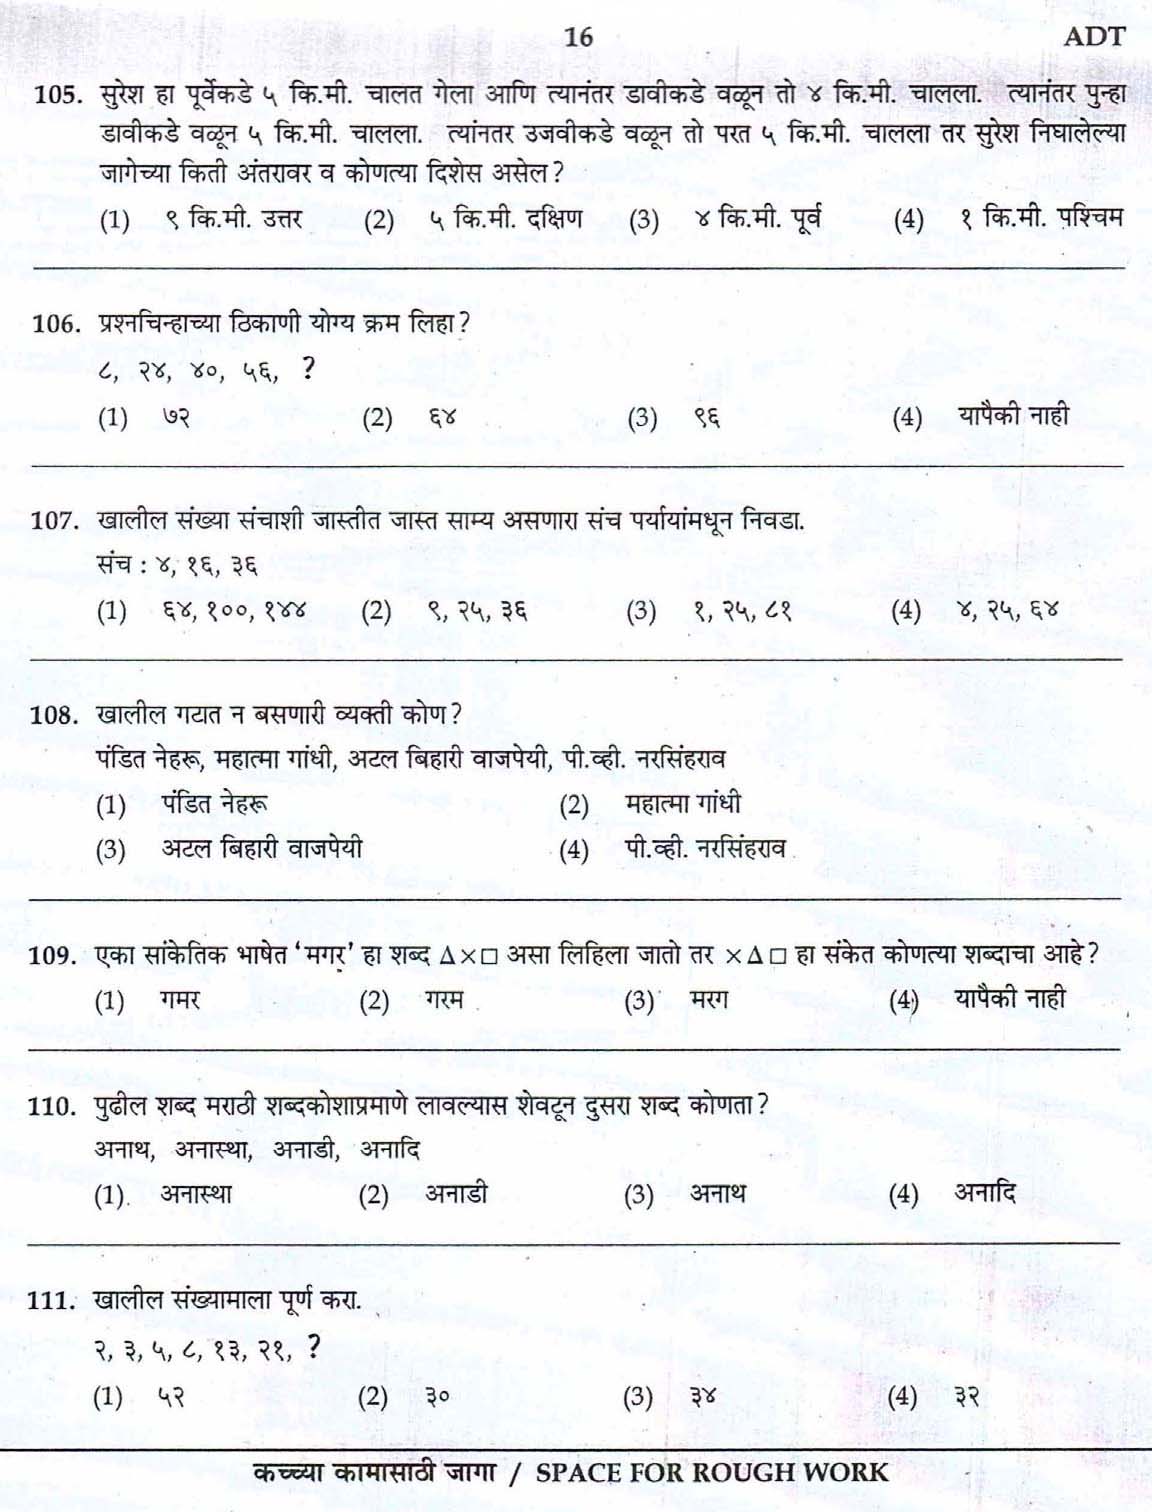 Maharashtra PSC Clerk Typist Exam Question Paper 2007 15